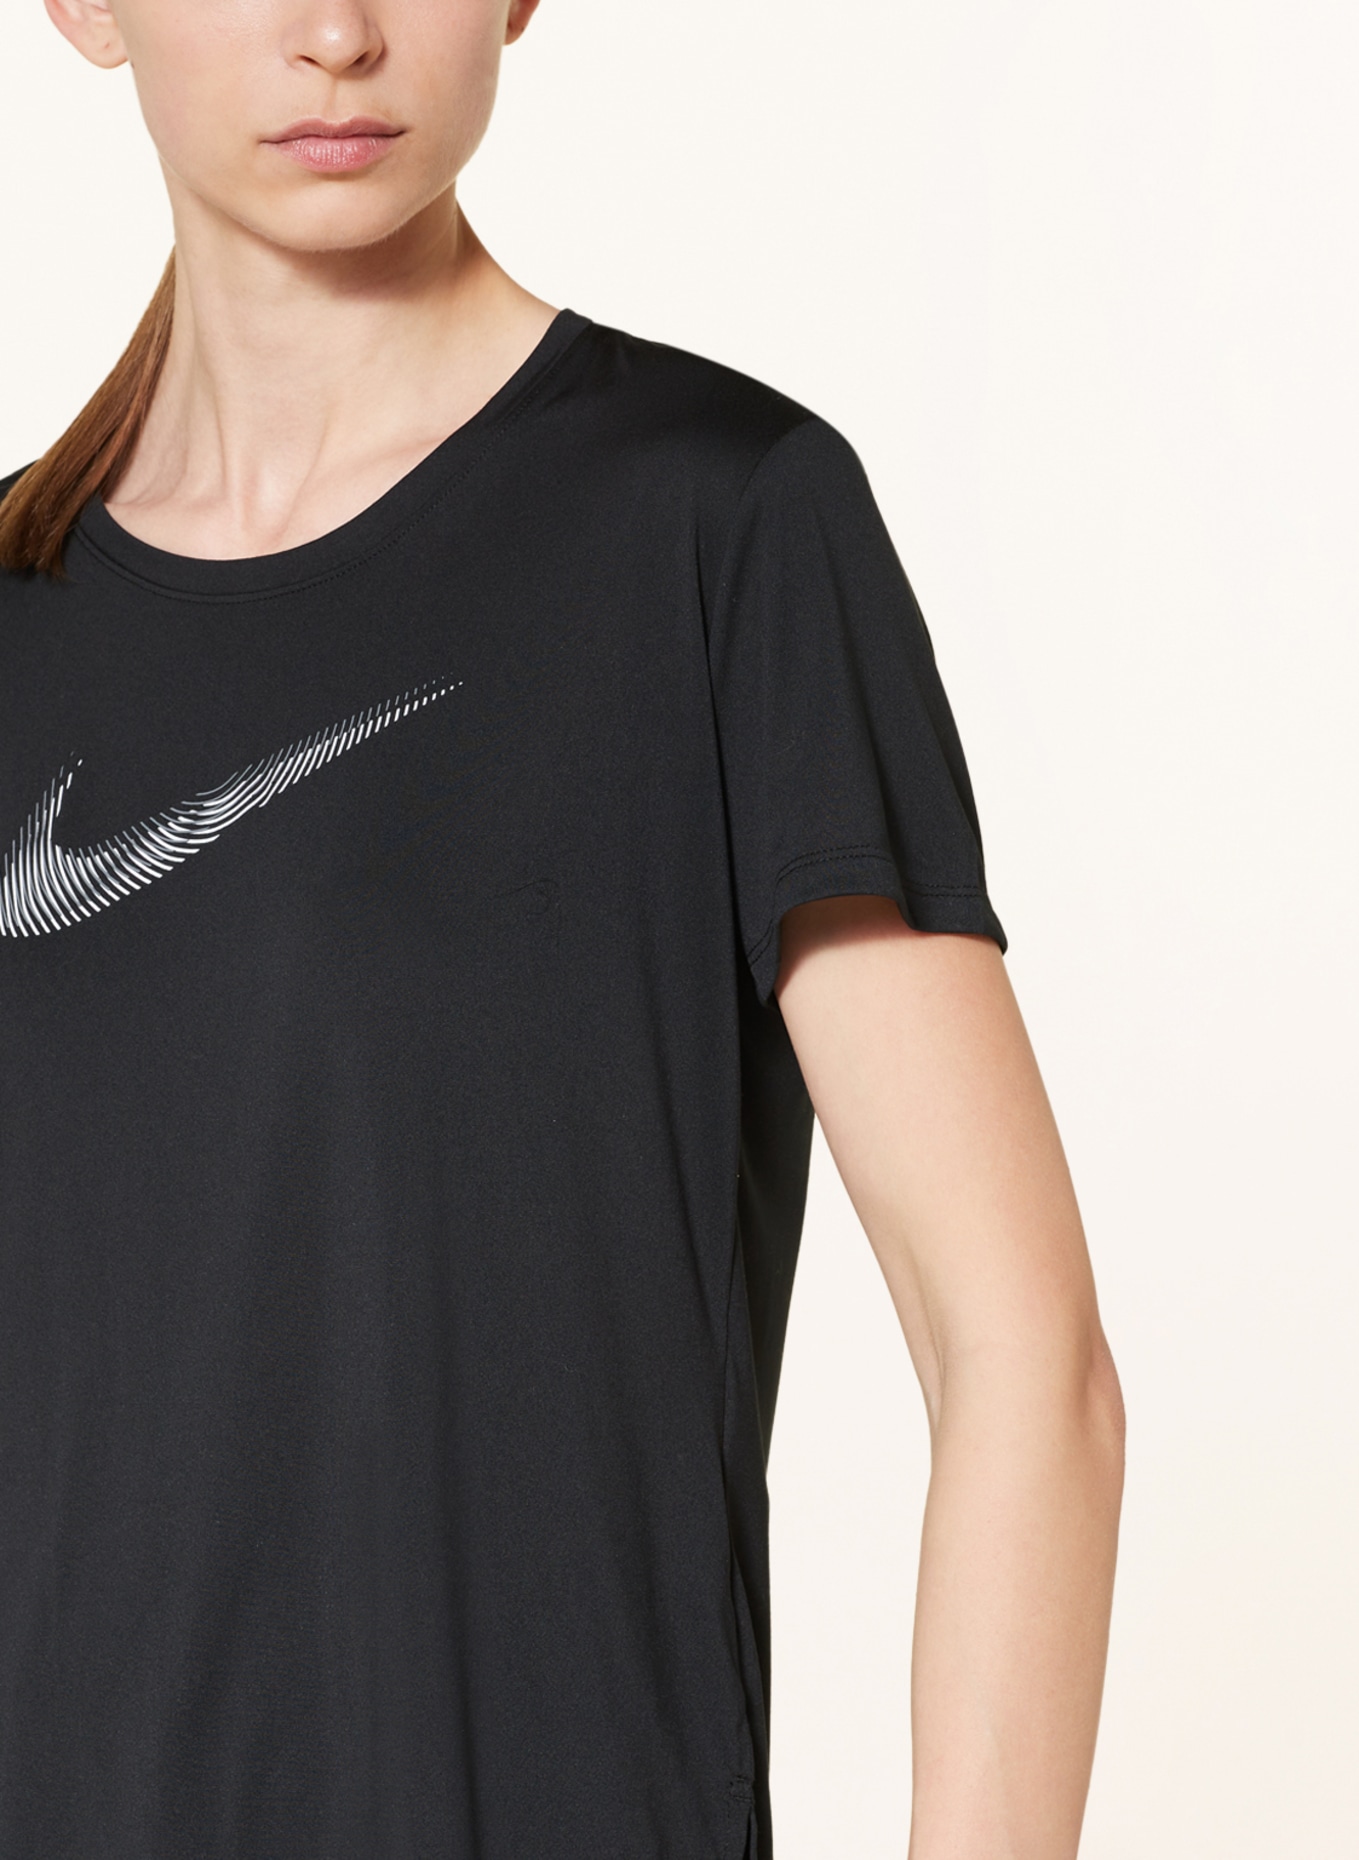 Nike Laufshirt DRI-FIT in schwarz